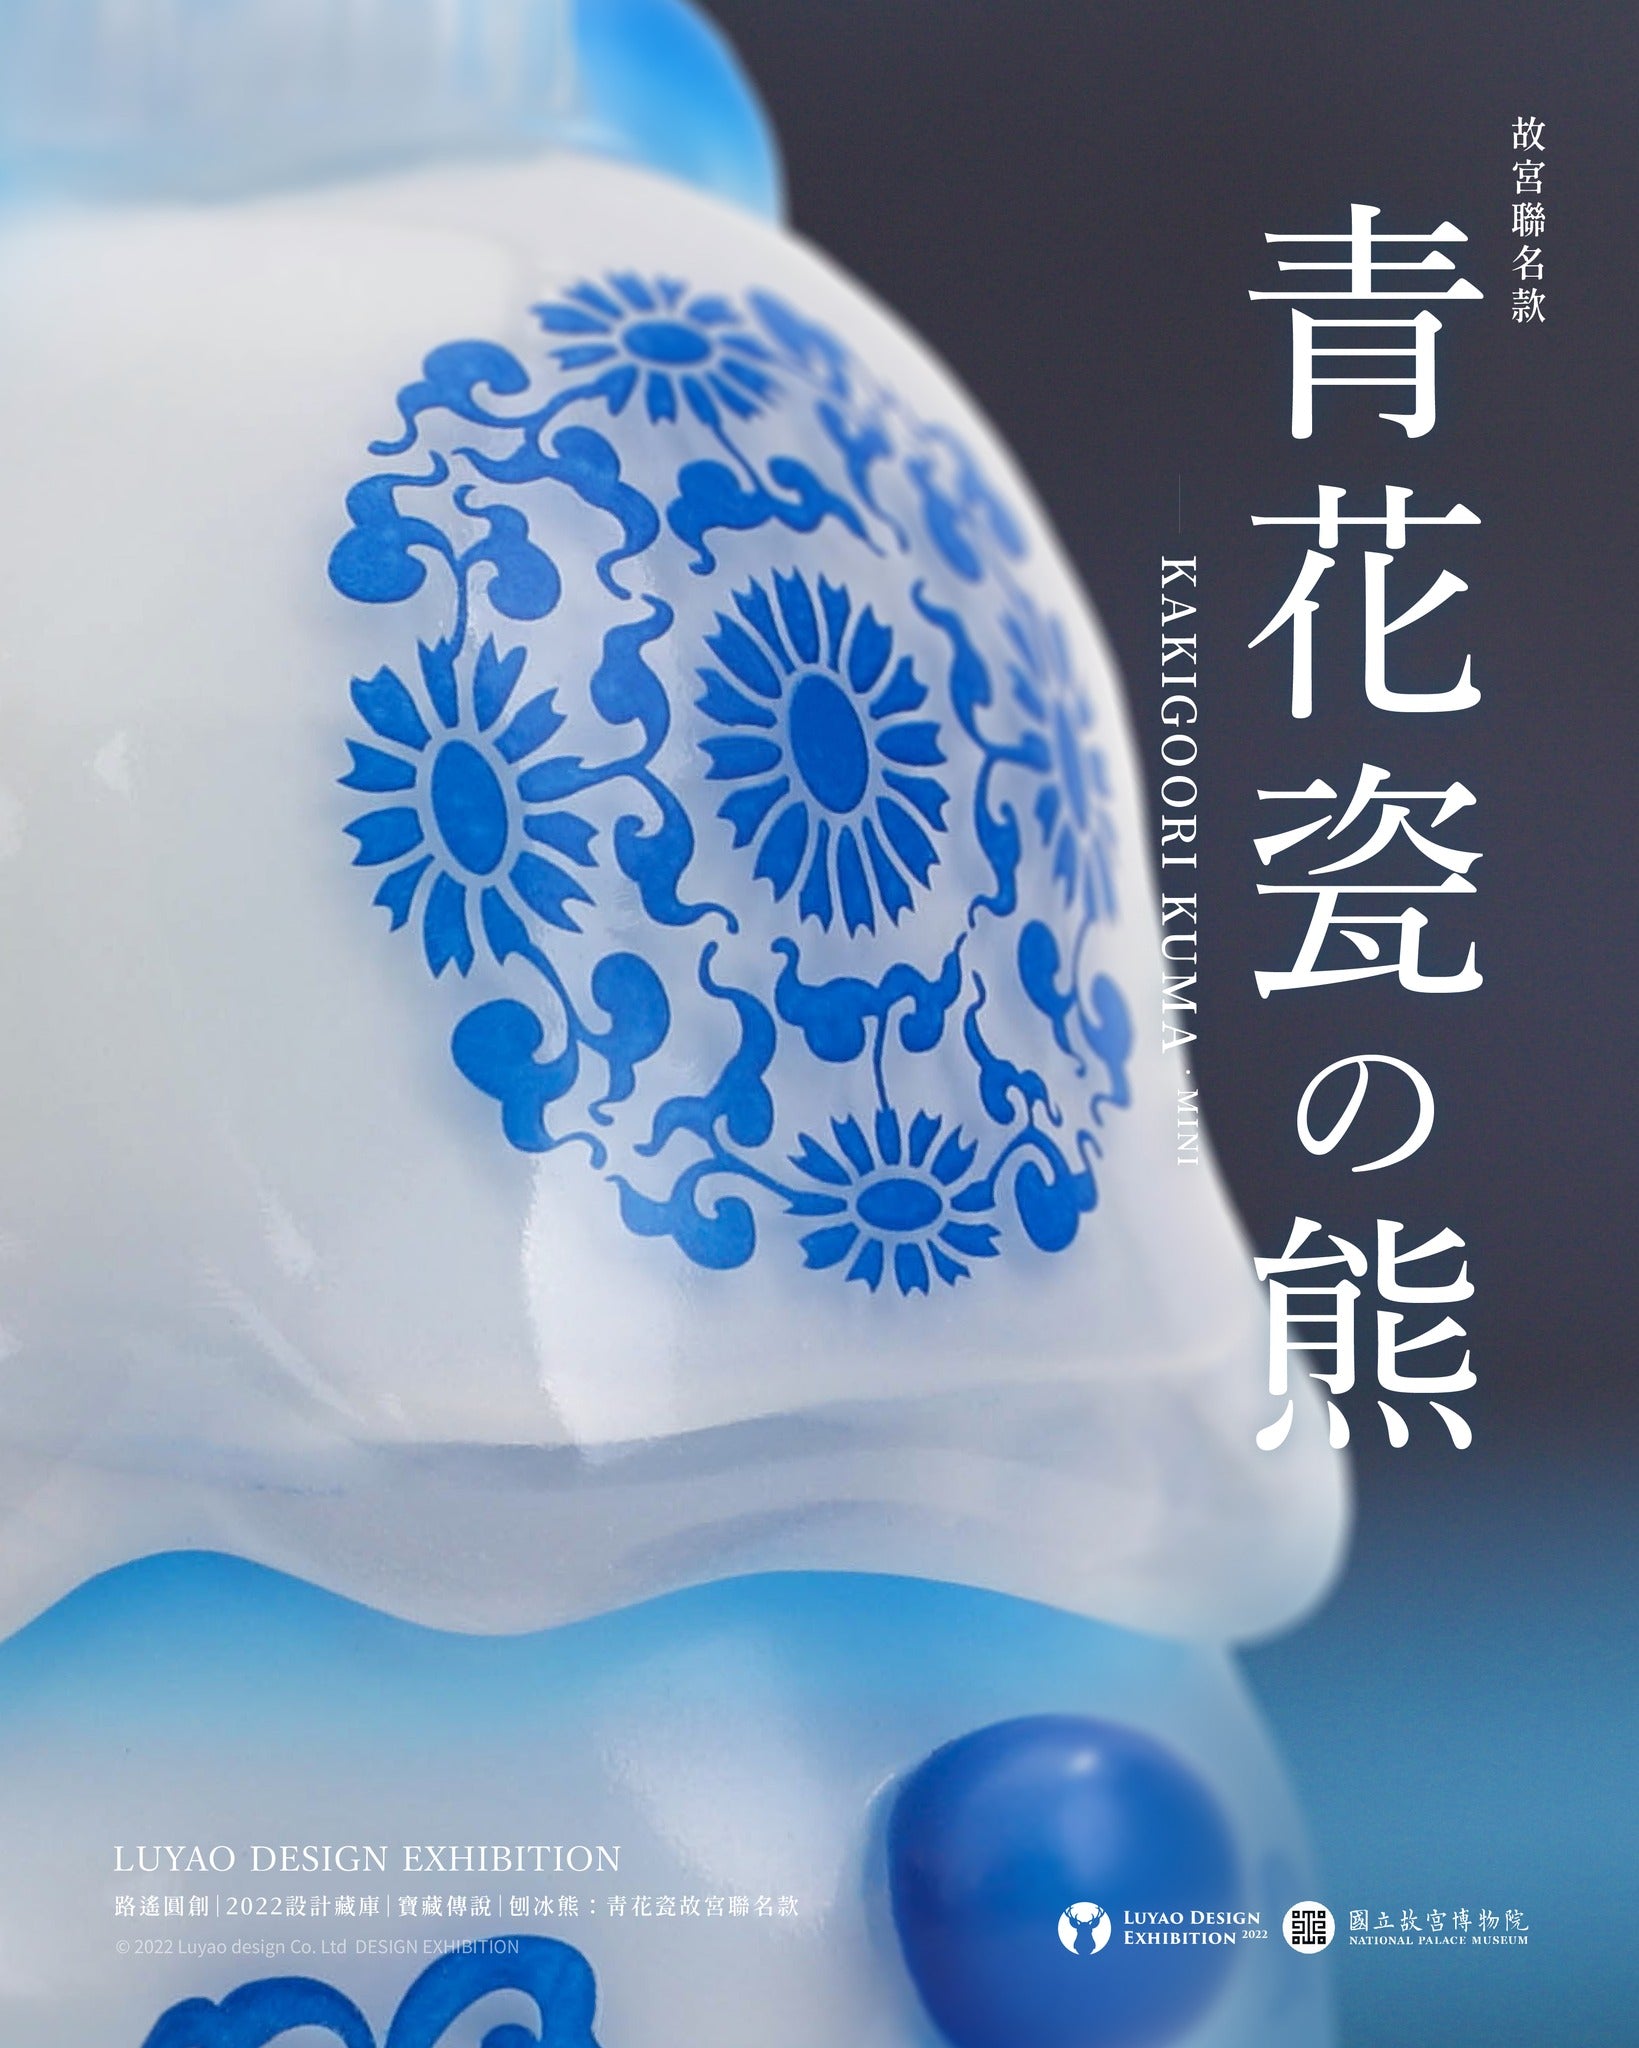 Mini Kakigoori Kuma-Blue and White Porcelain